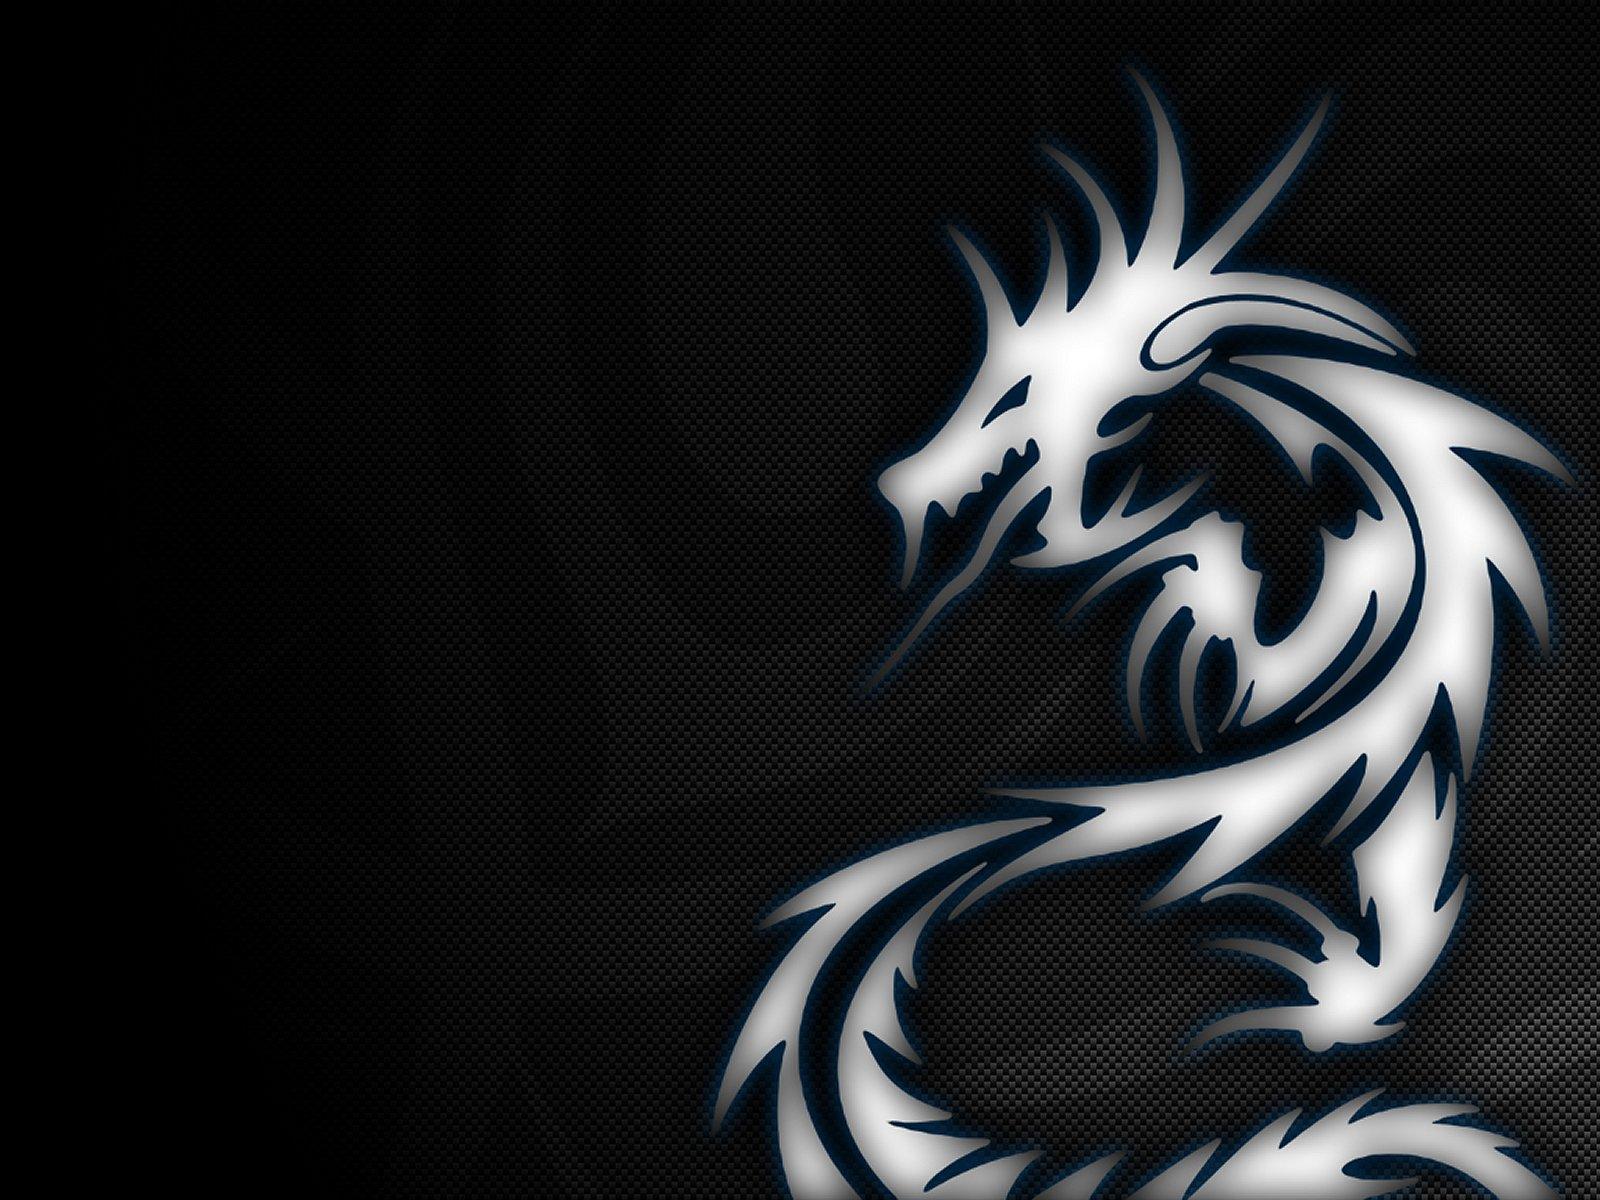 Cool Dragons Logo - Cool Dragon HD Wallpaper Backgrounds Free Download | PixelsTalk.Net